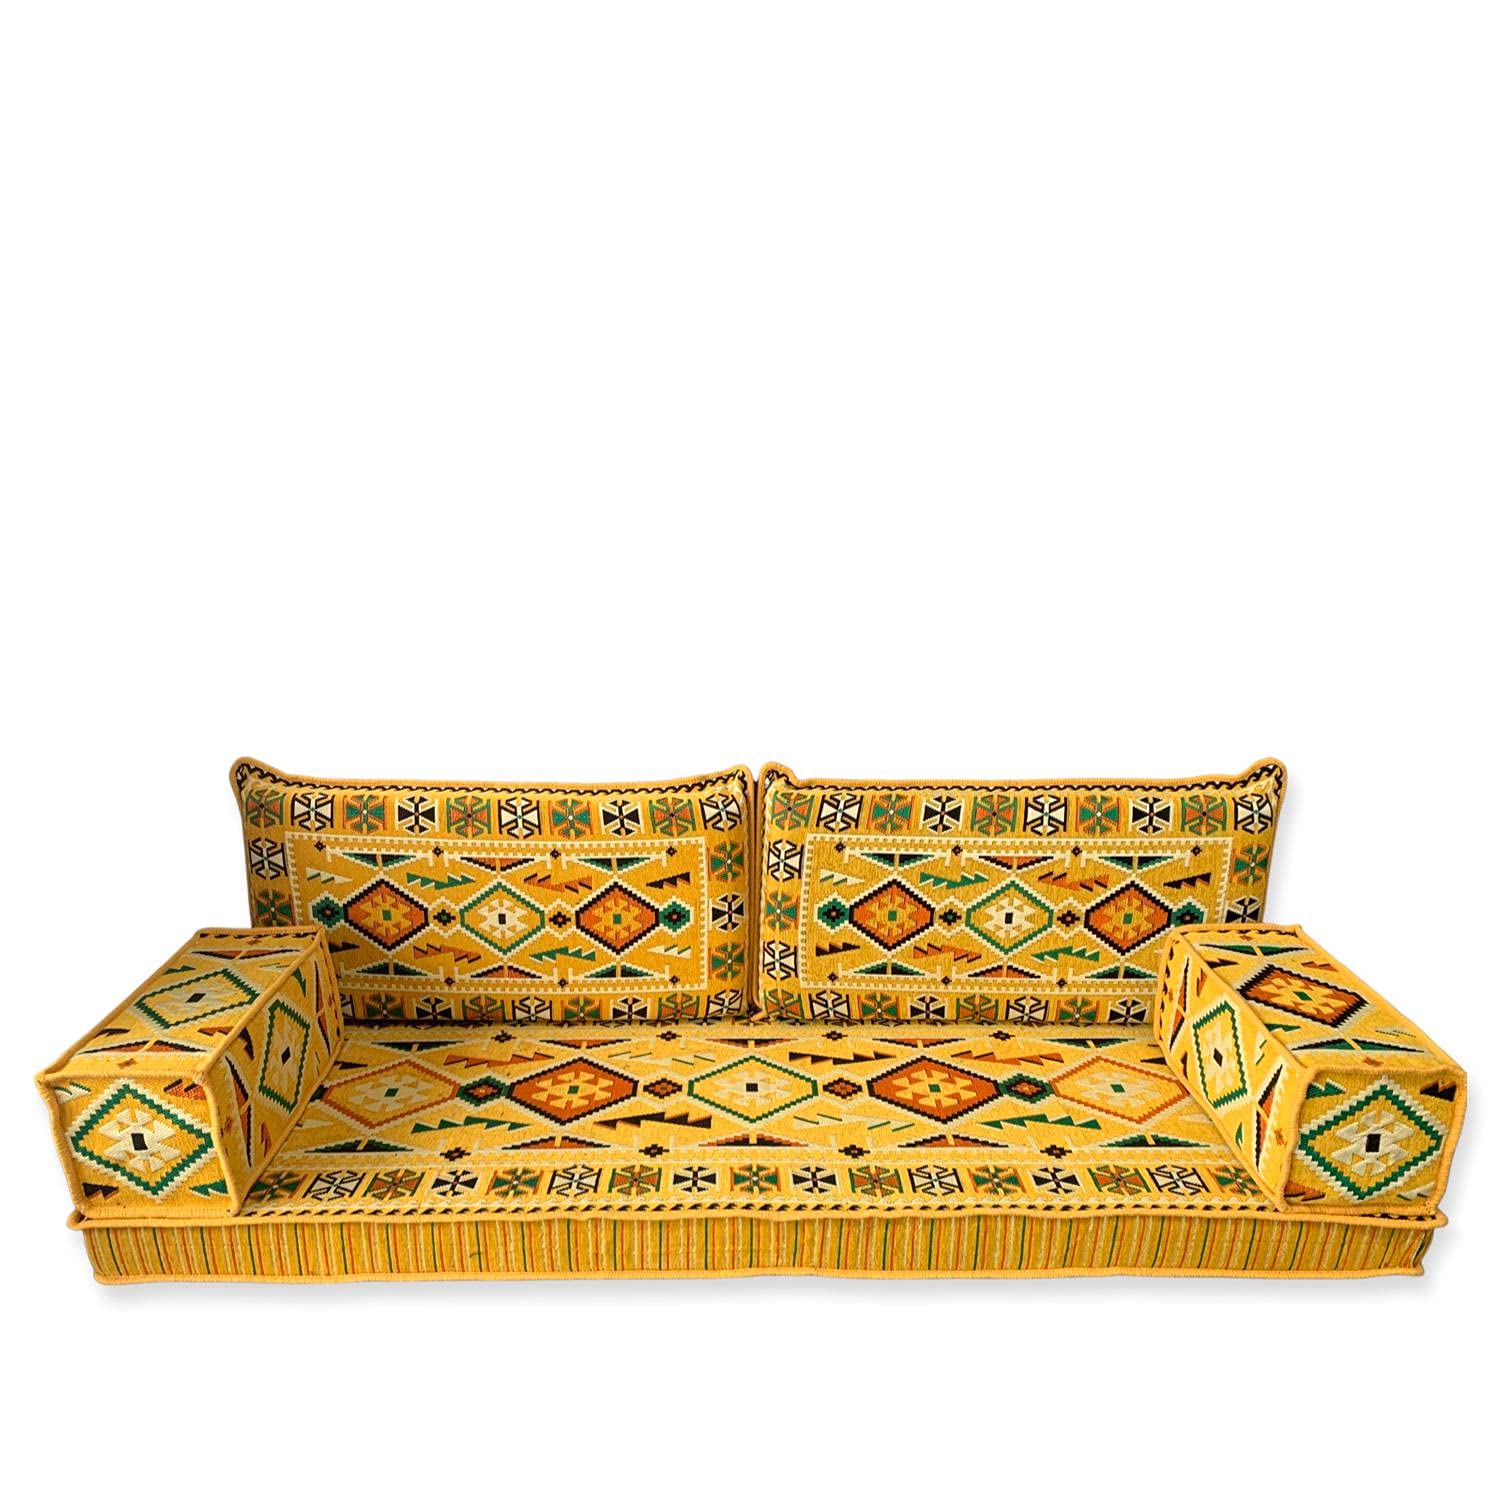 Arabic floor sofa,Arabic floor seating,Arabic couch,Oriental floor seating,Arabic Jalsa,Arabic Majlis Sofa - MA 45 (With High Quality FOAM)